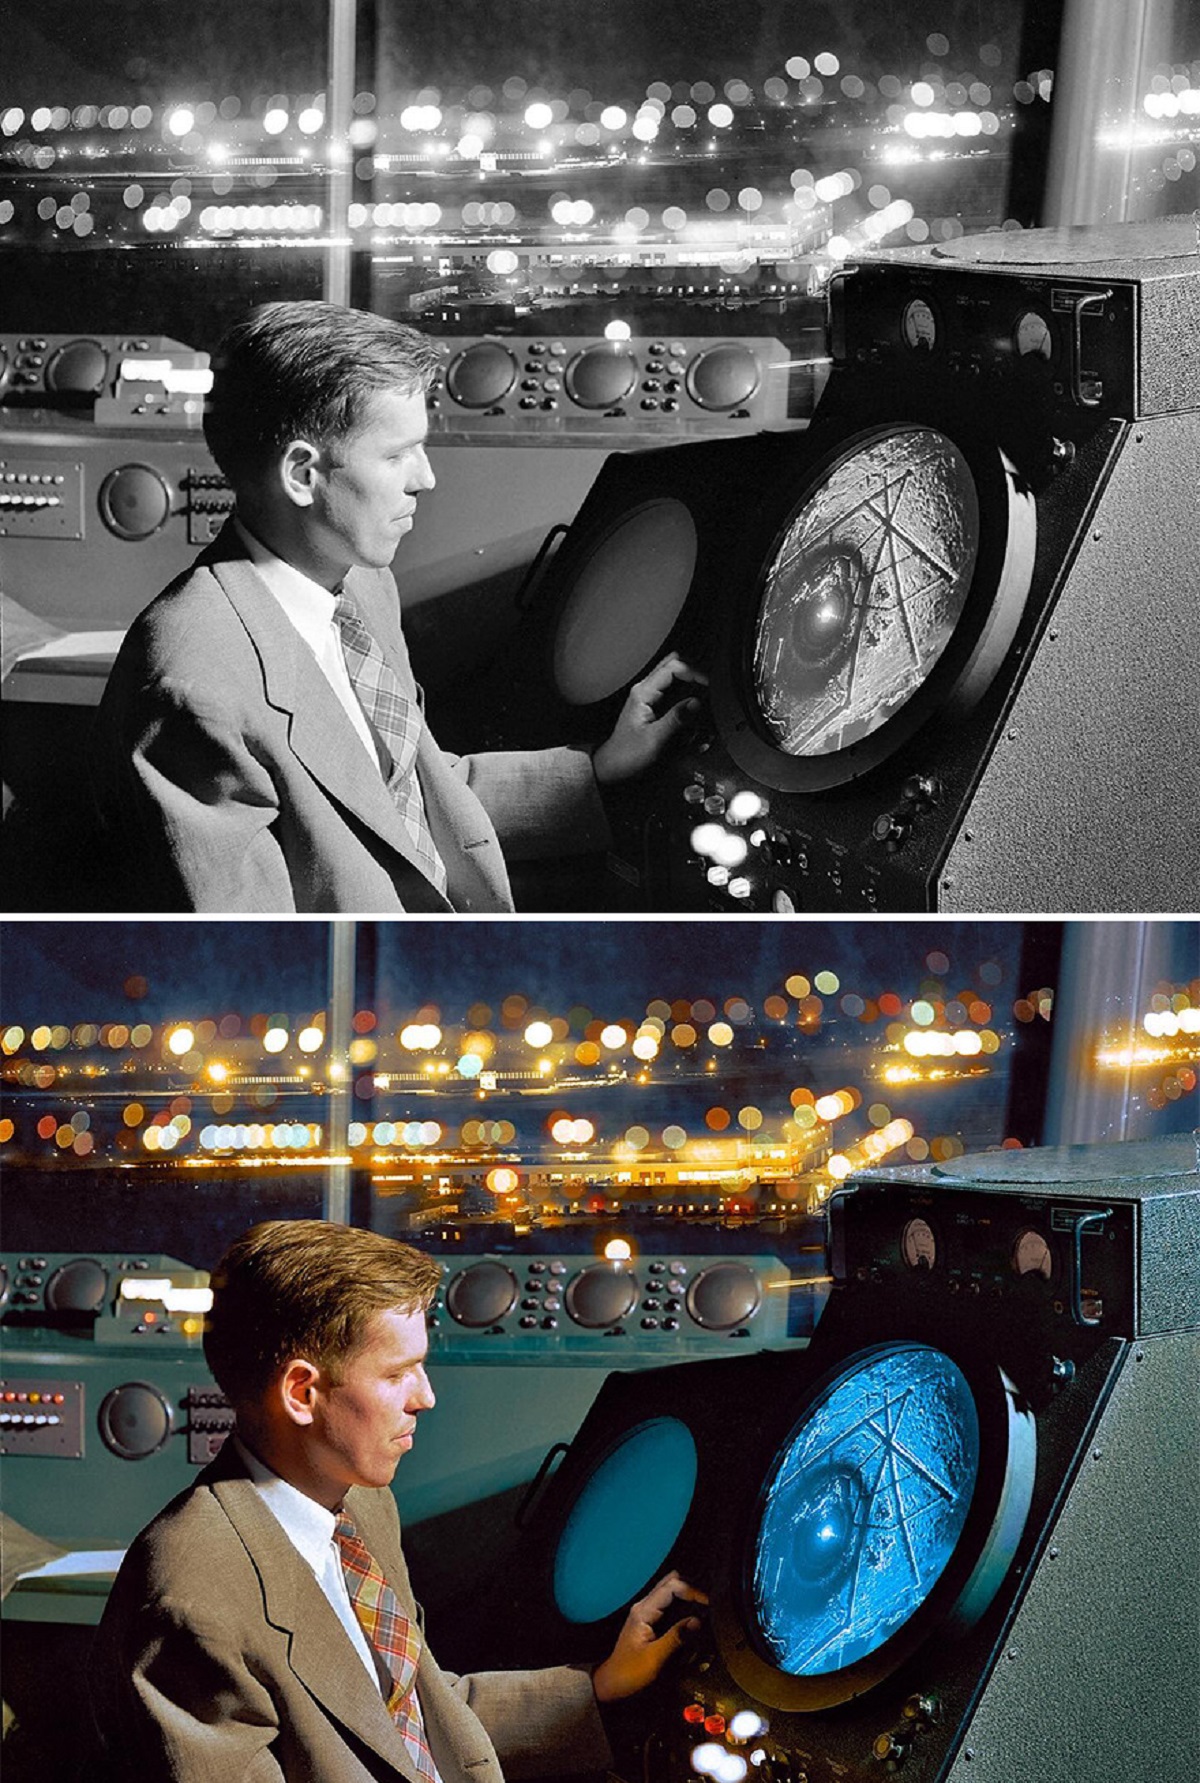 September 1952. "Man In An Airport Control Tower Looking At Radar Screen."